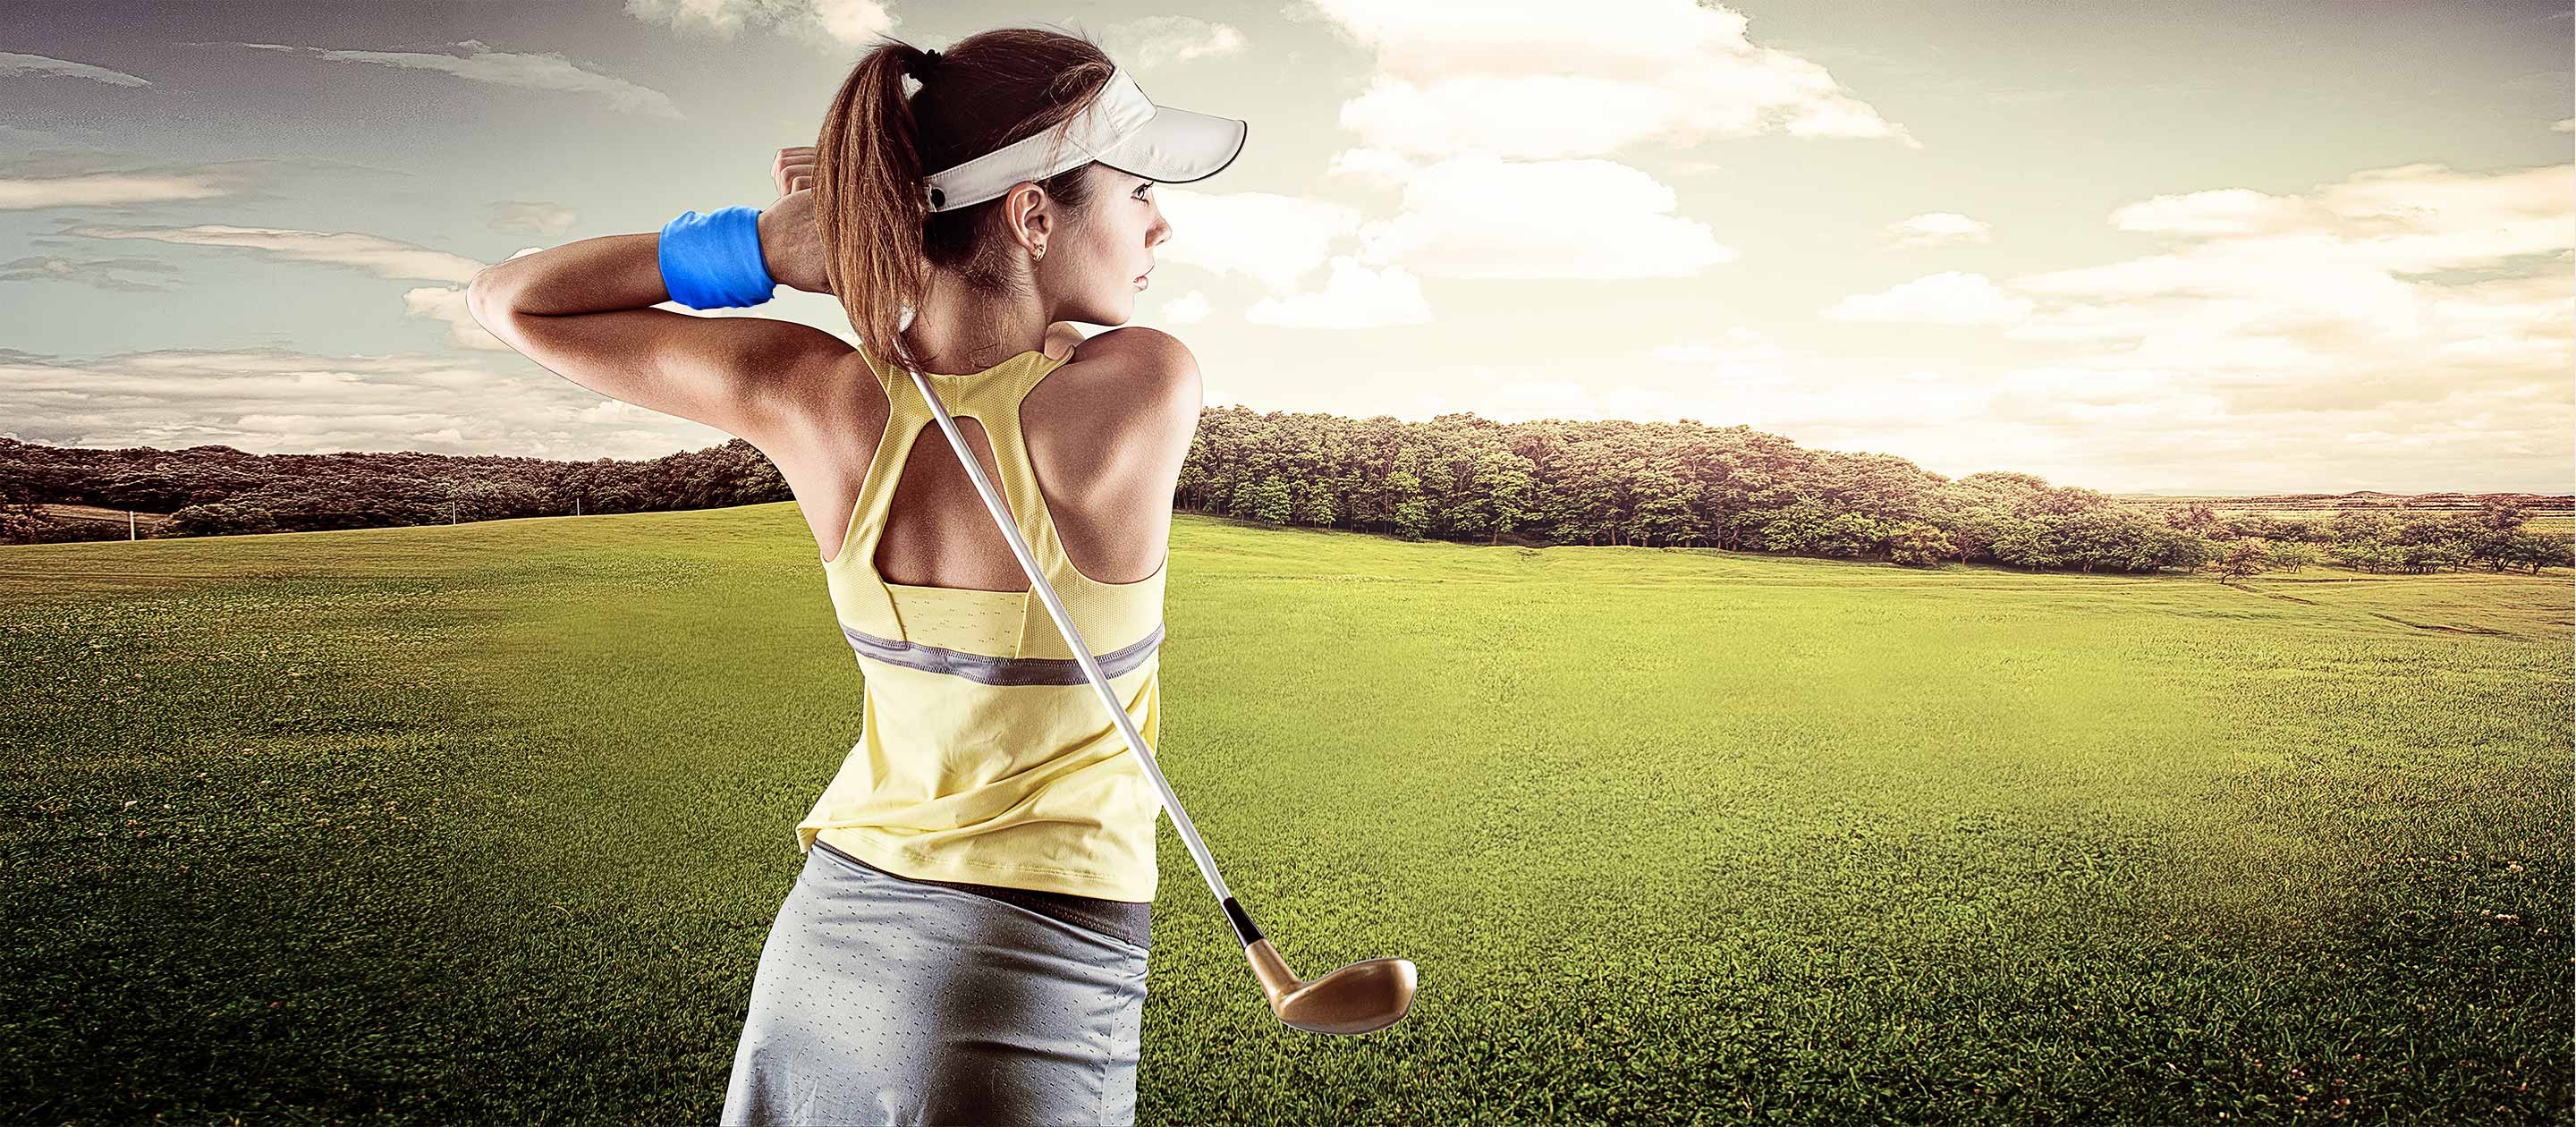 Photo: Woman golfing